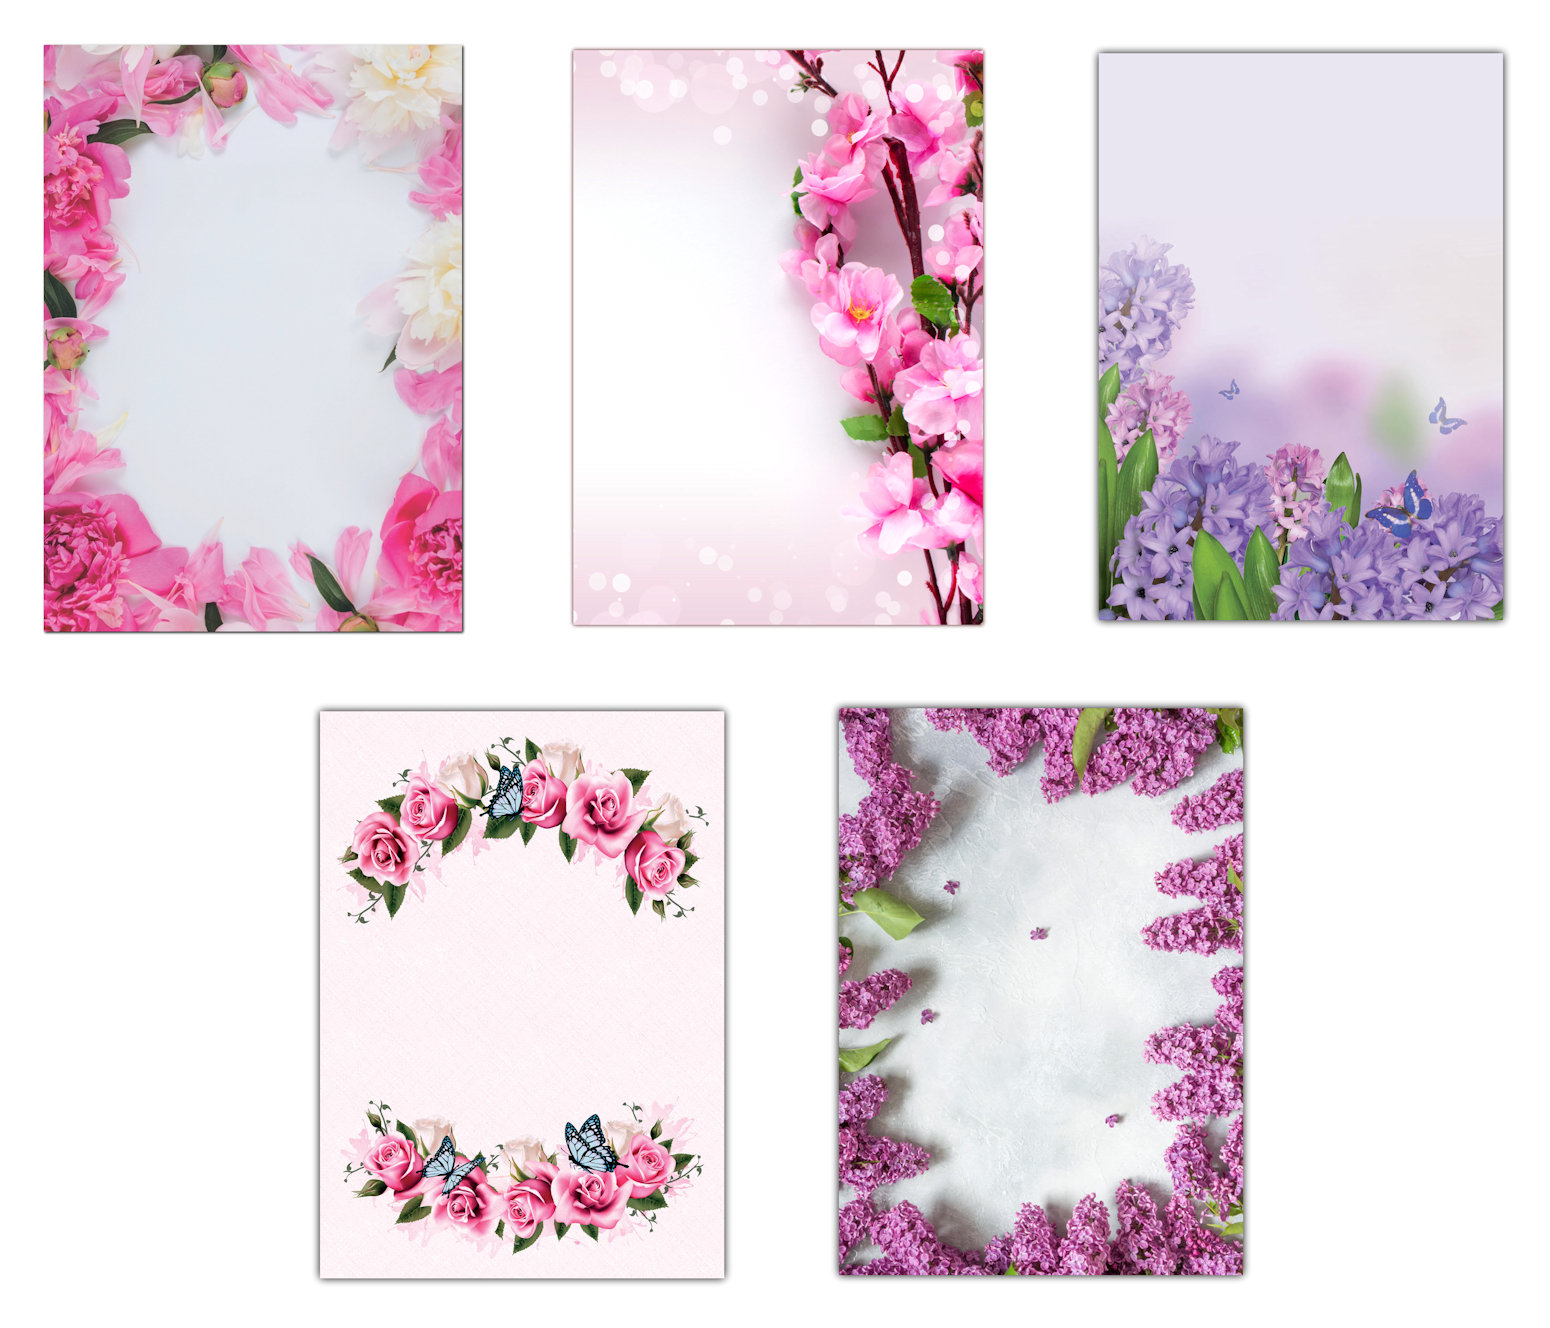 5 x 5 Blatt Briefpapier Mix DIN A4 Blumen Blüten Vintage Rosen Retro MPA-5235 